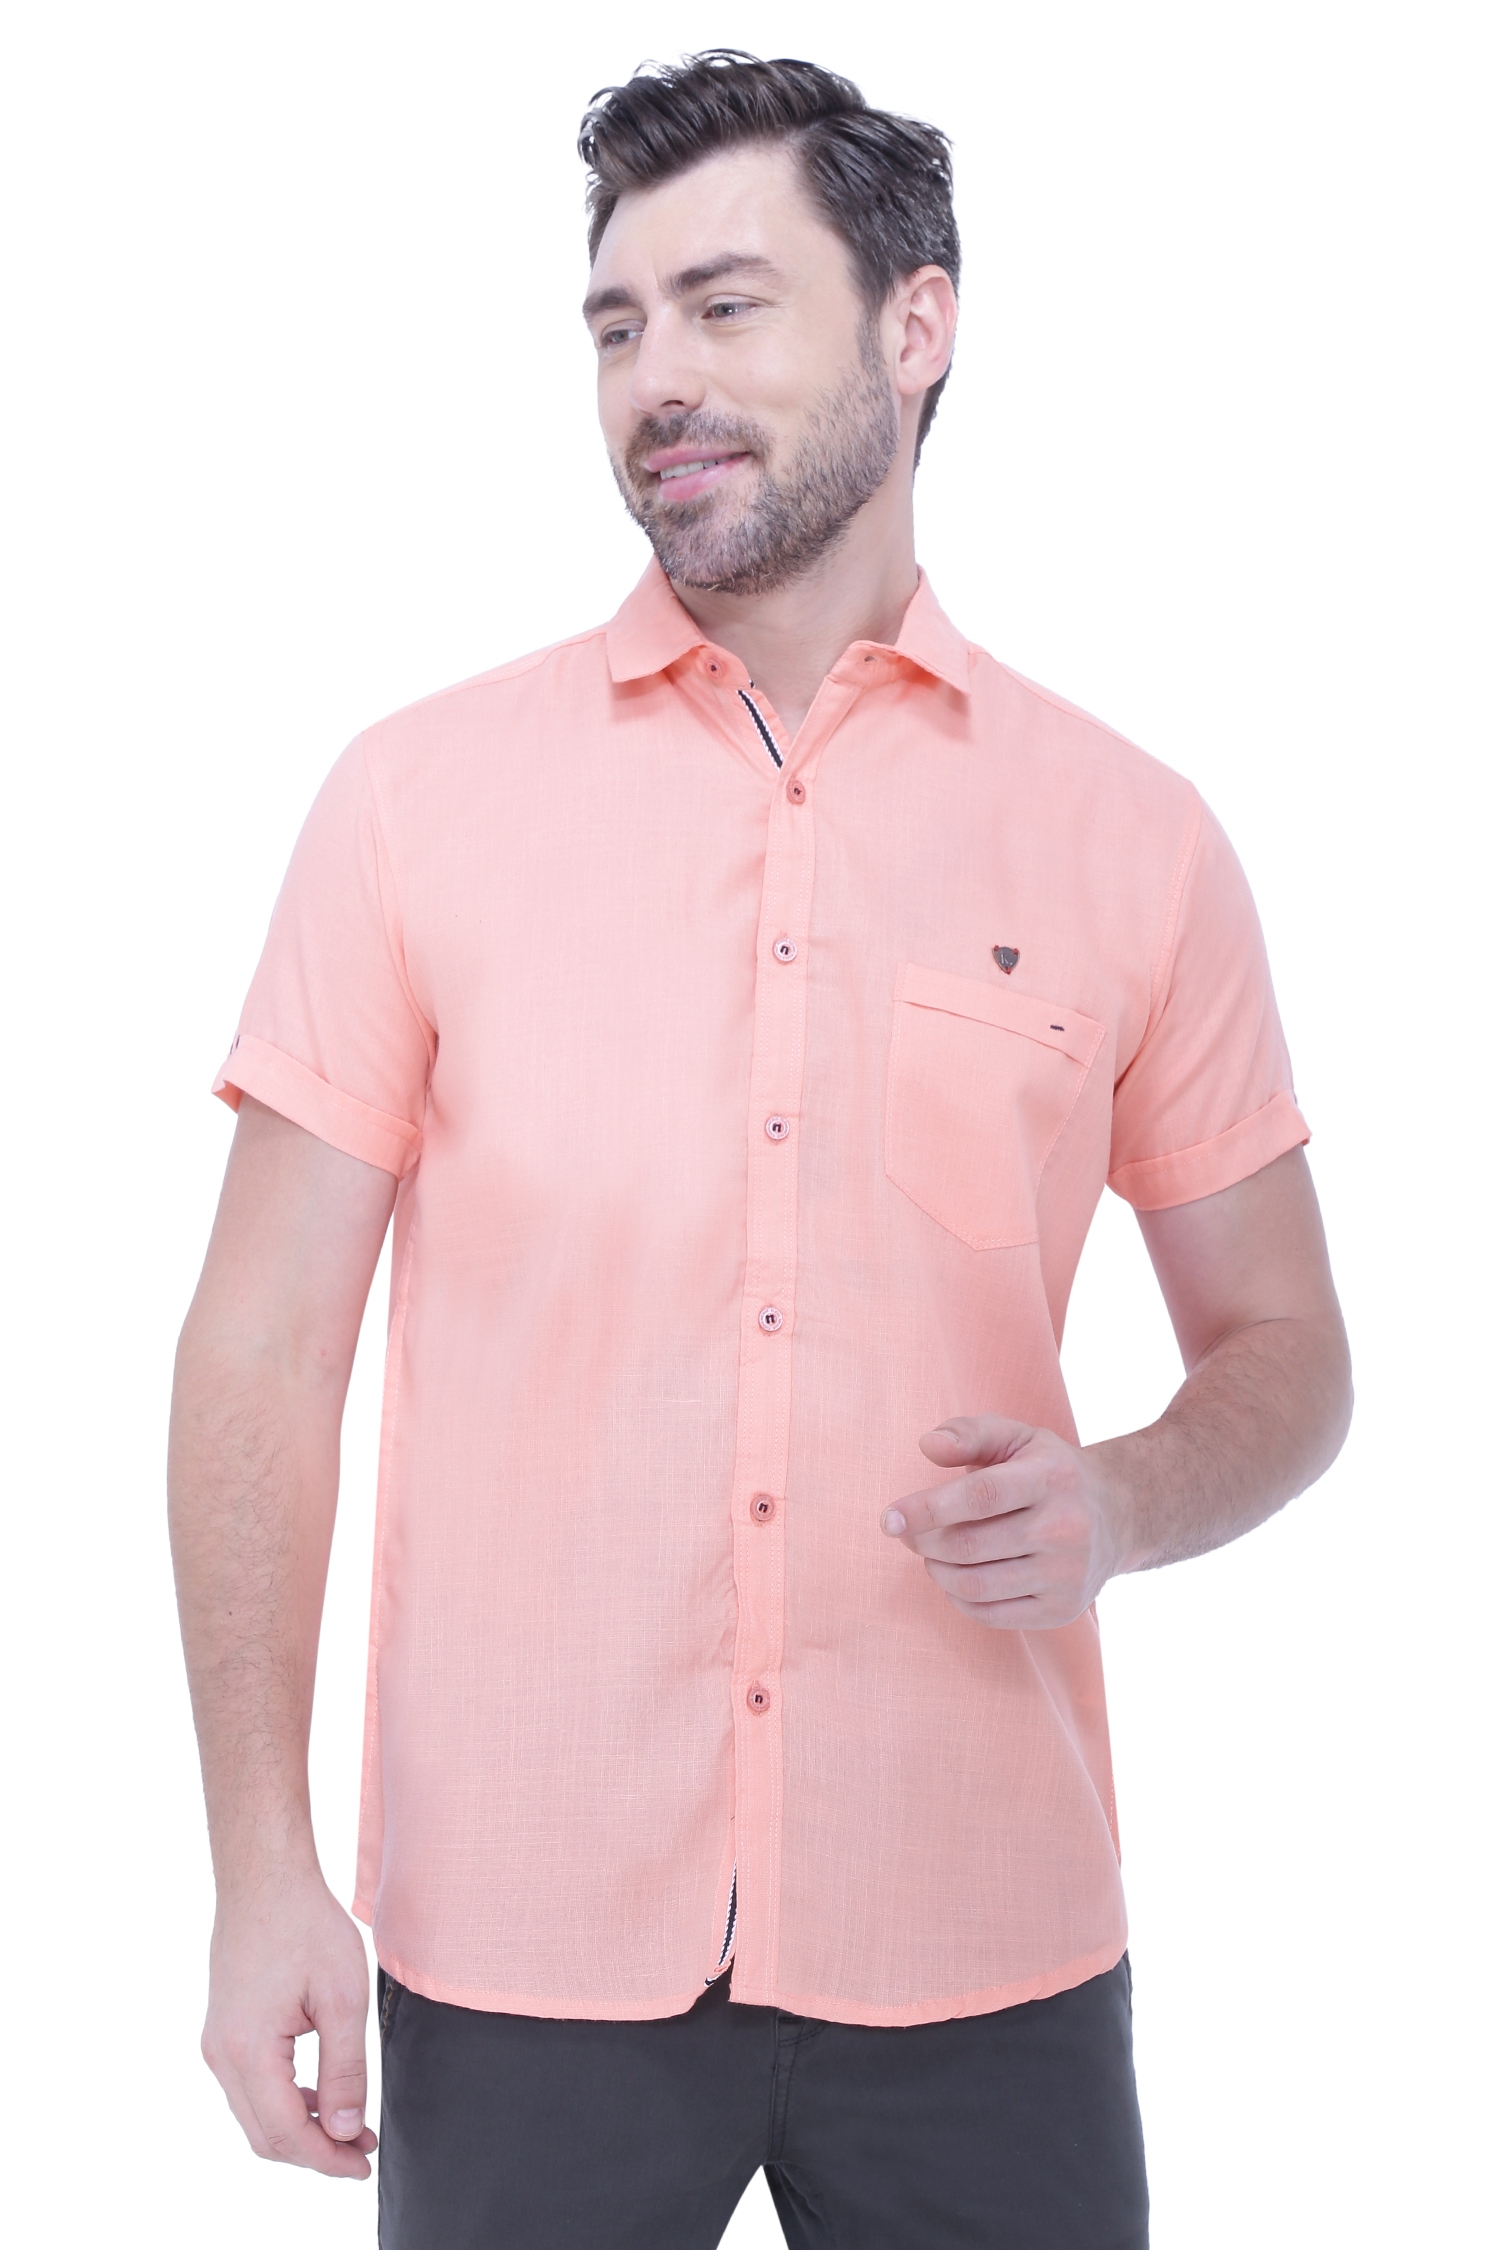 Kuons Avenue | Kuons Avenue Men's Linen Blend Half Sleeves Casual Shirt-KACLHS1234